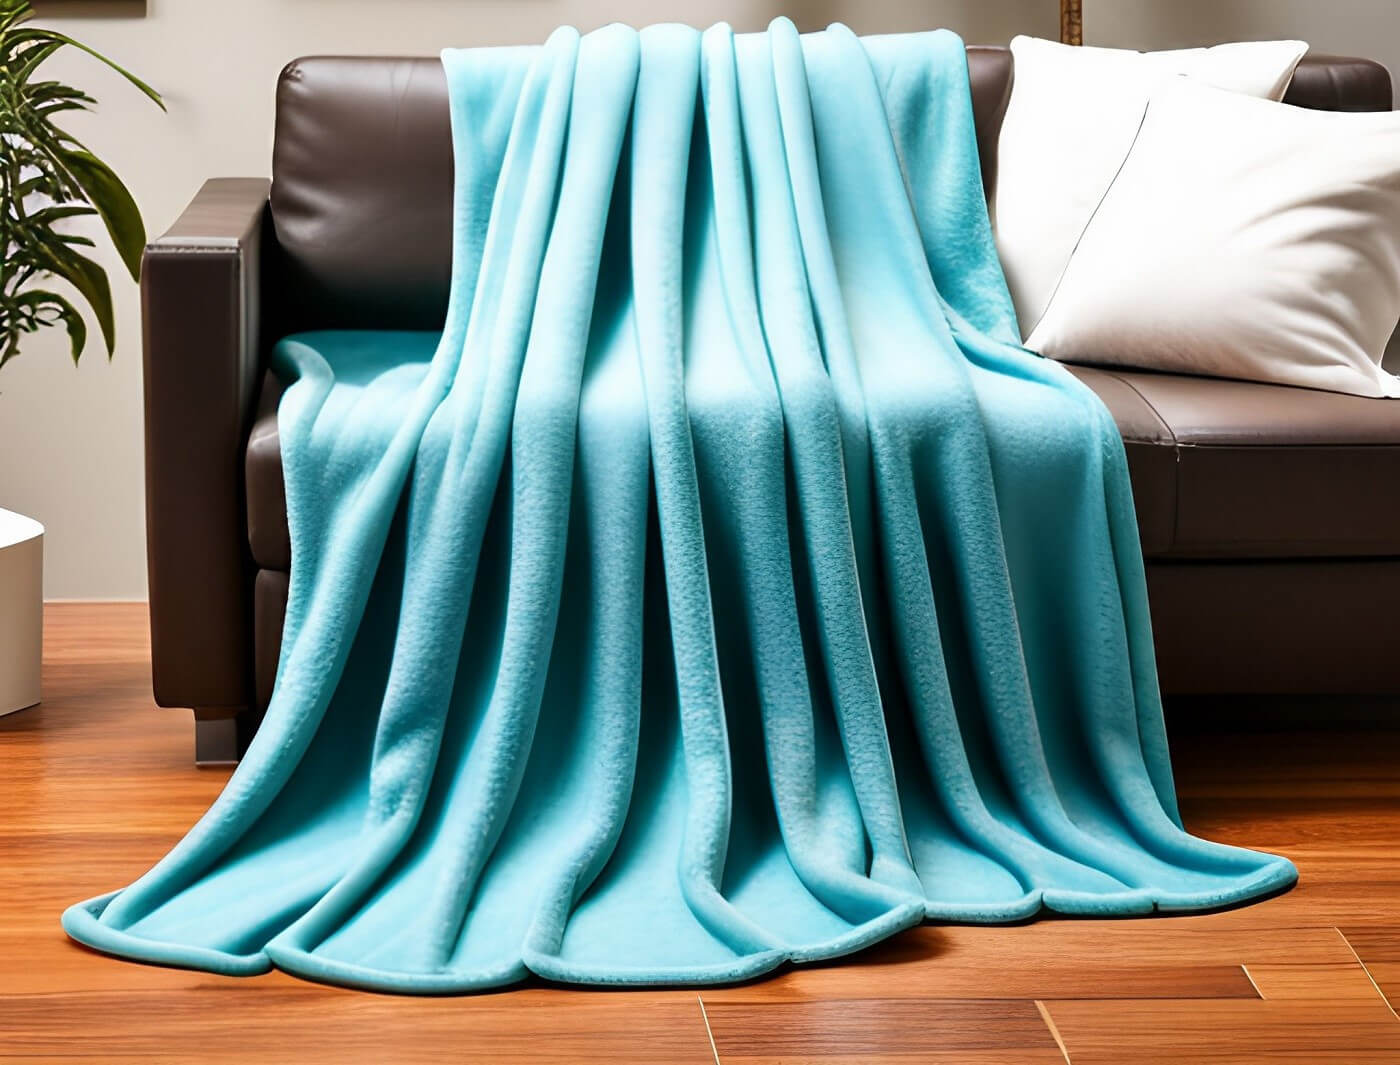 How do you wash a fleece blanket?